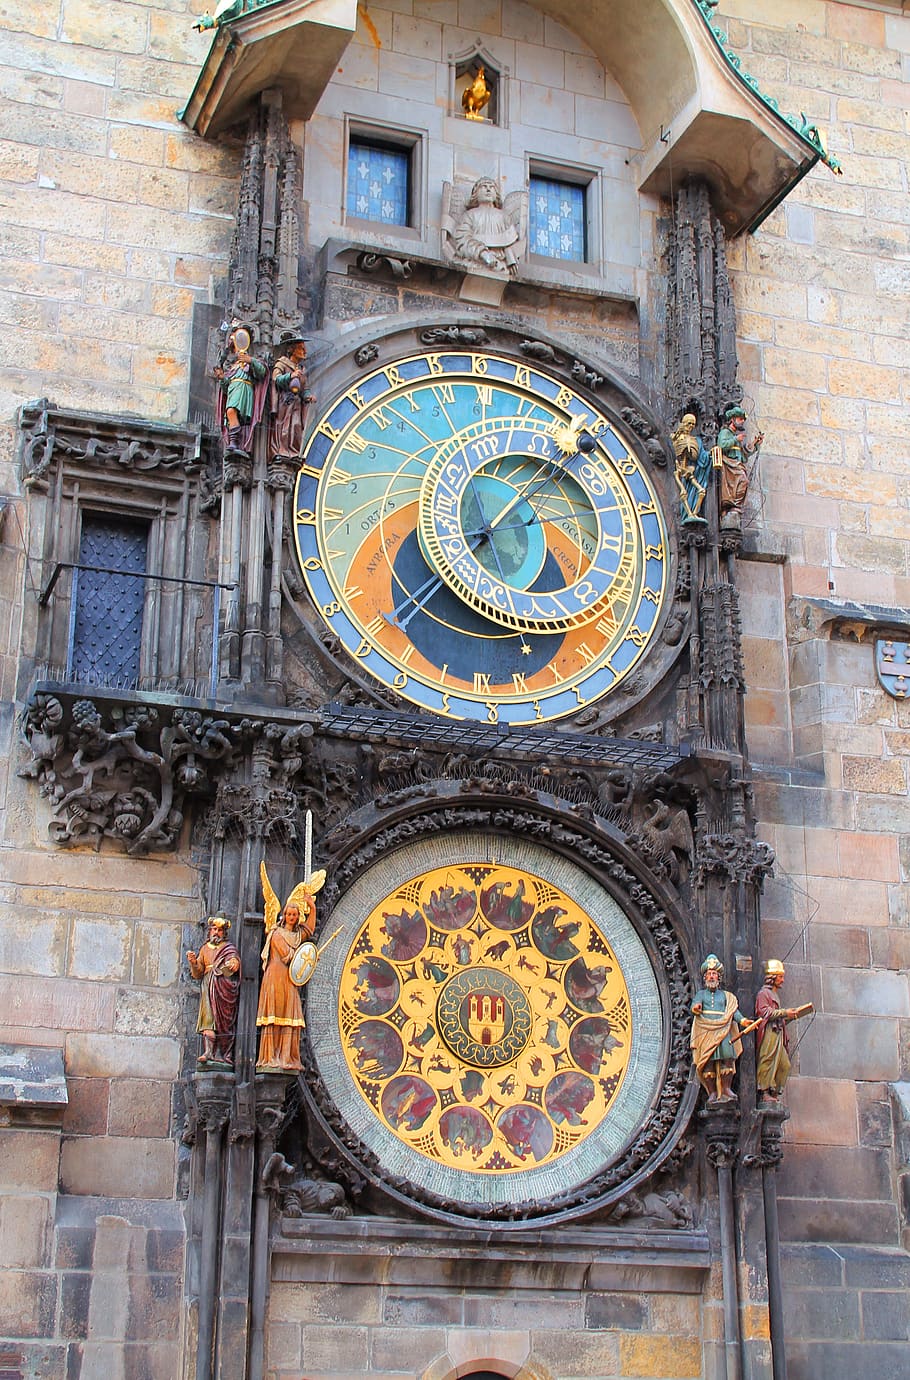 prague, astrological clock, czech republic, historically, places of interest, clock, building exterior, architecture, clock tower, astronomical clock